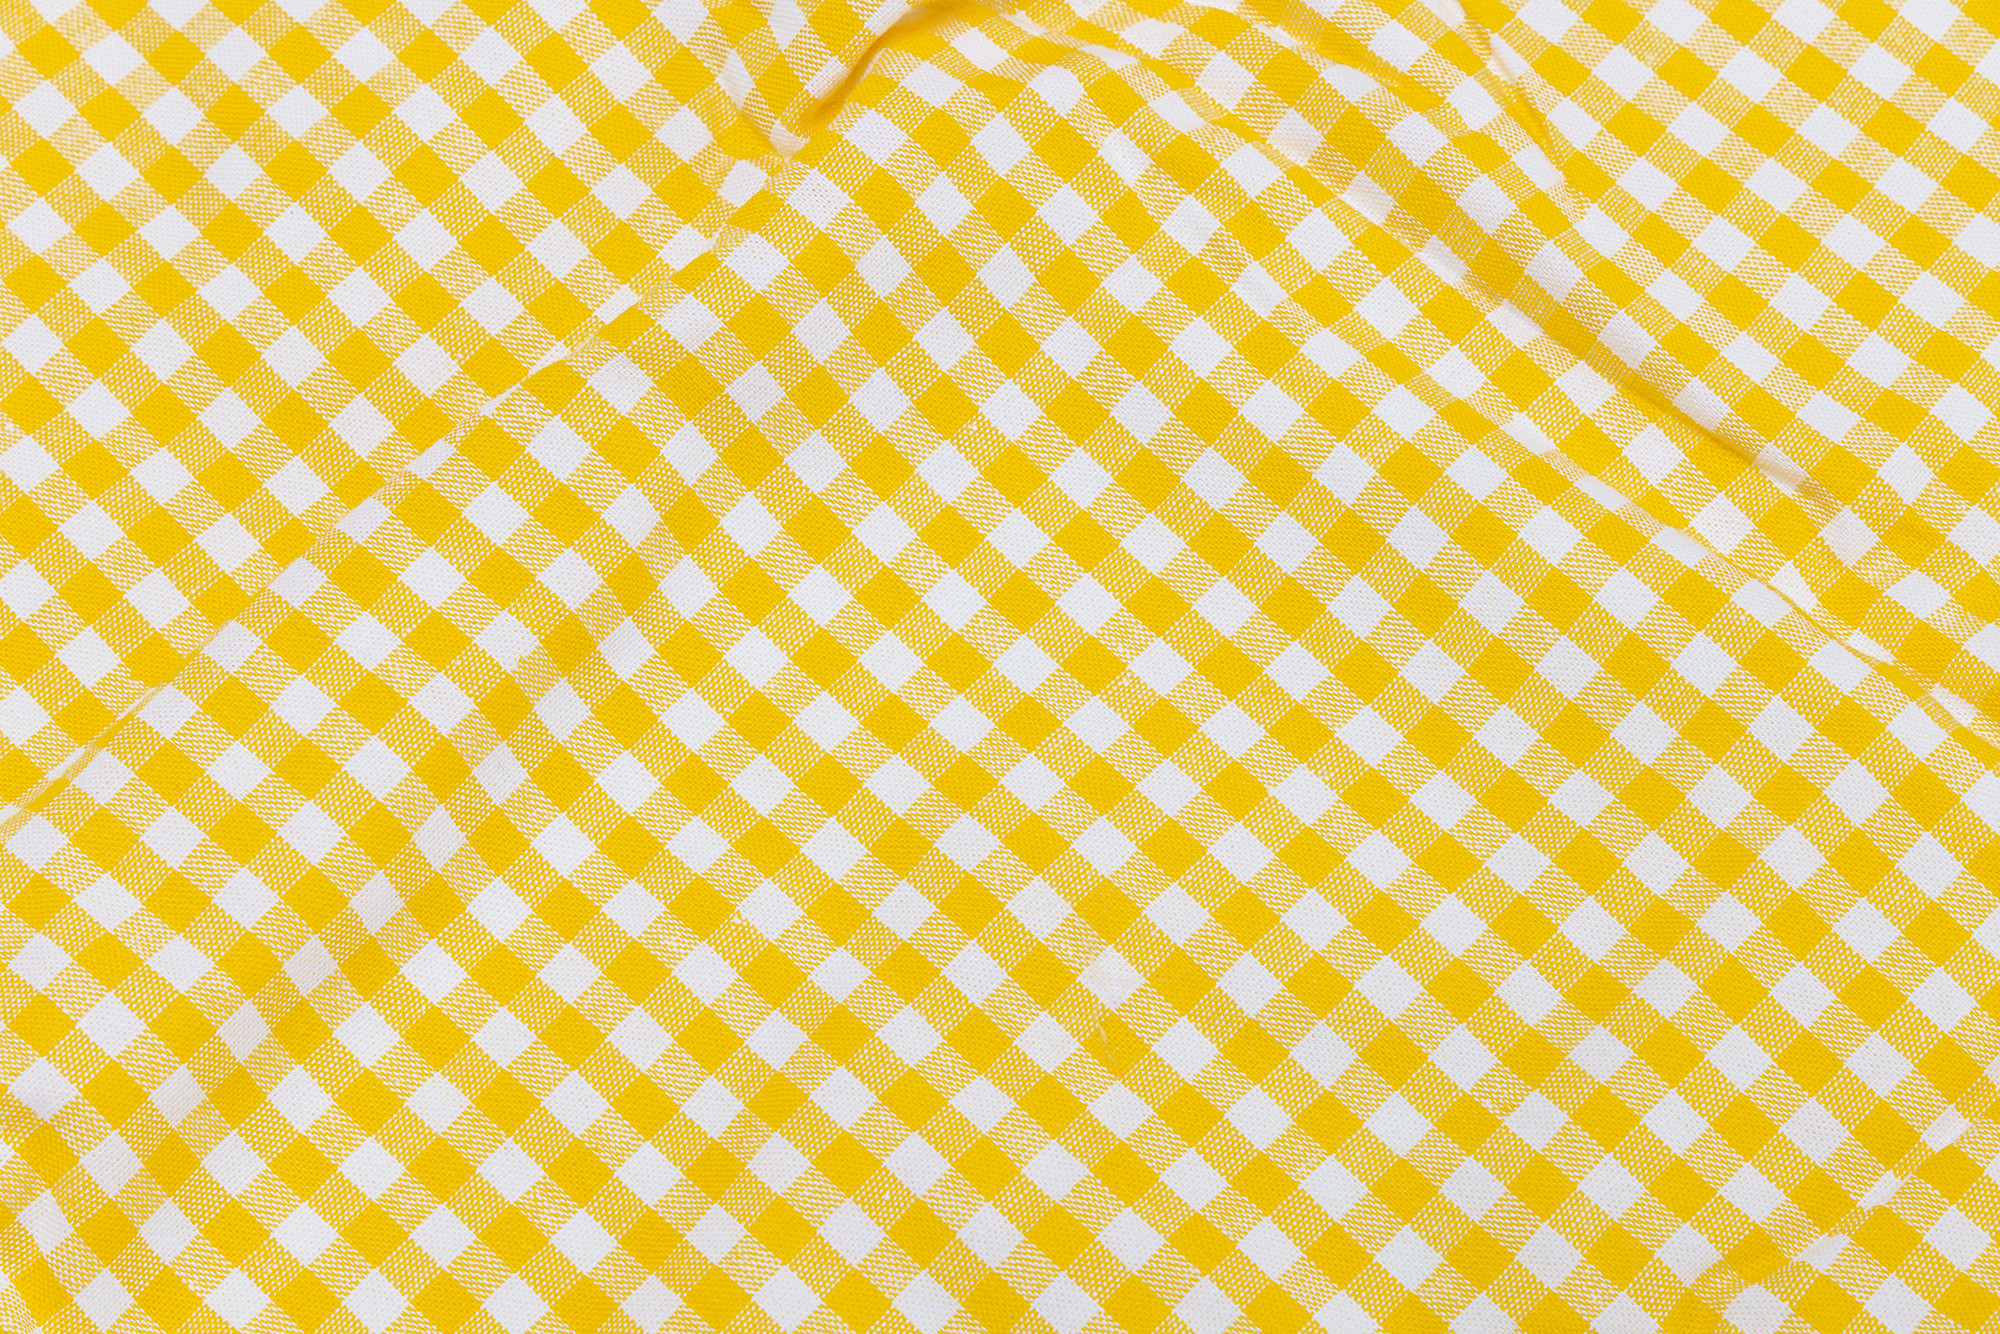 Karlie Welpenspielzeug Küken, gelb, 27x27cm inkl. Schmusedecke